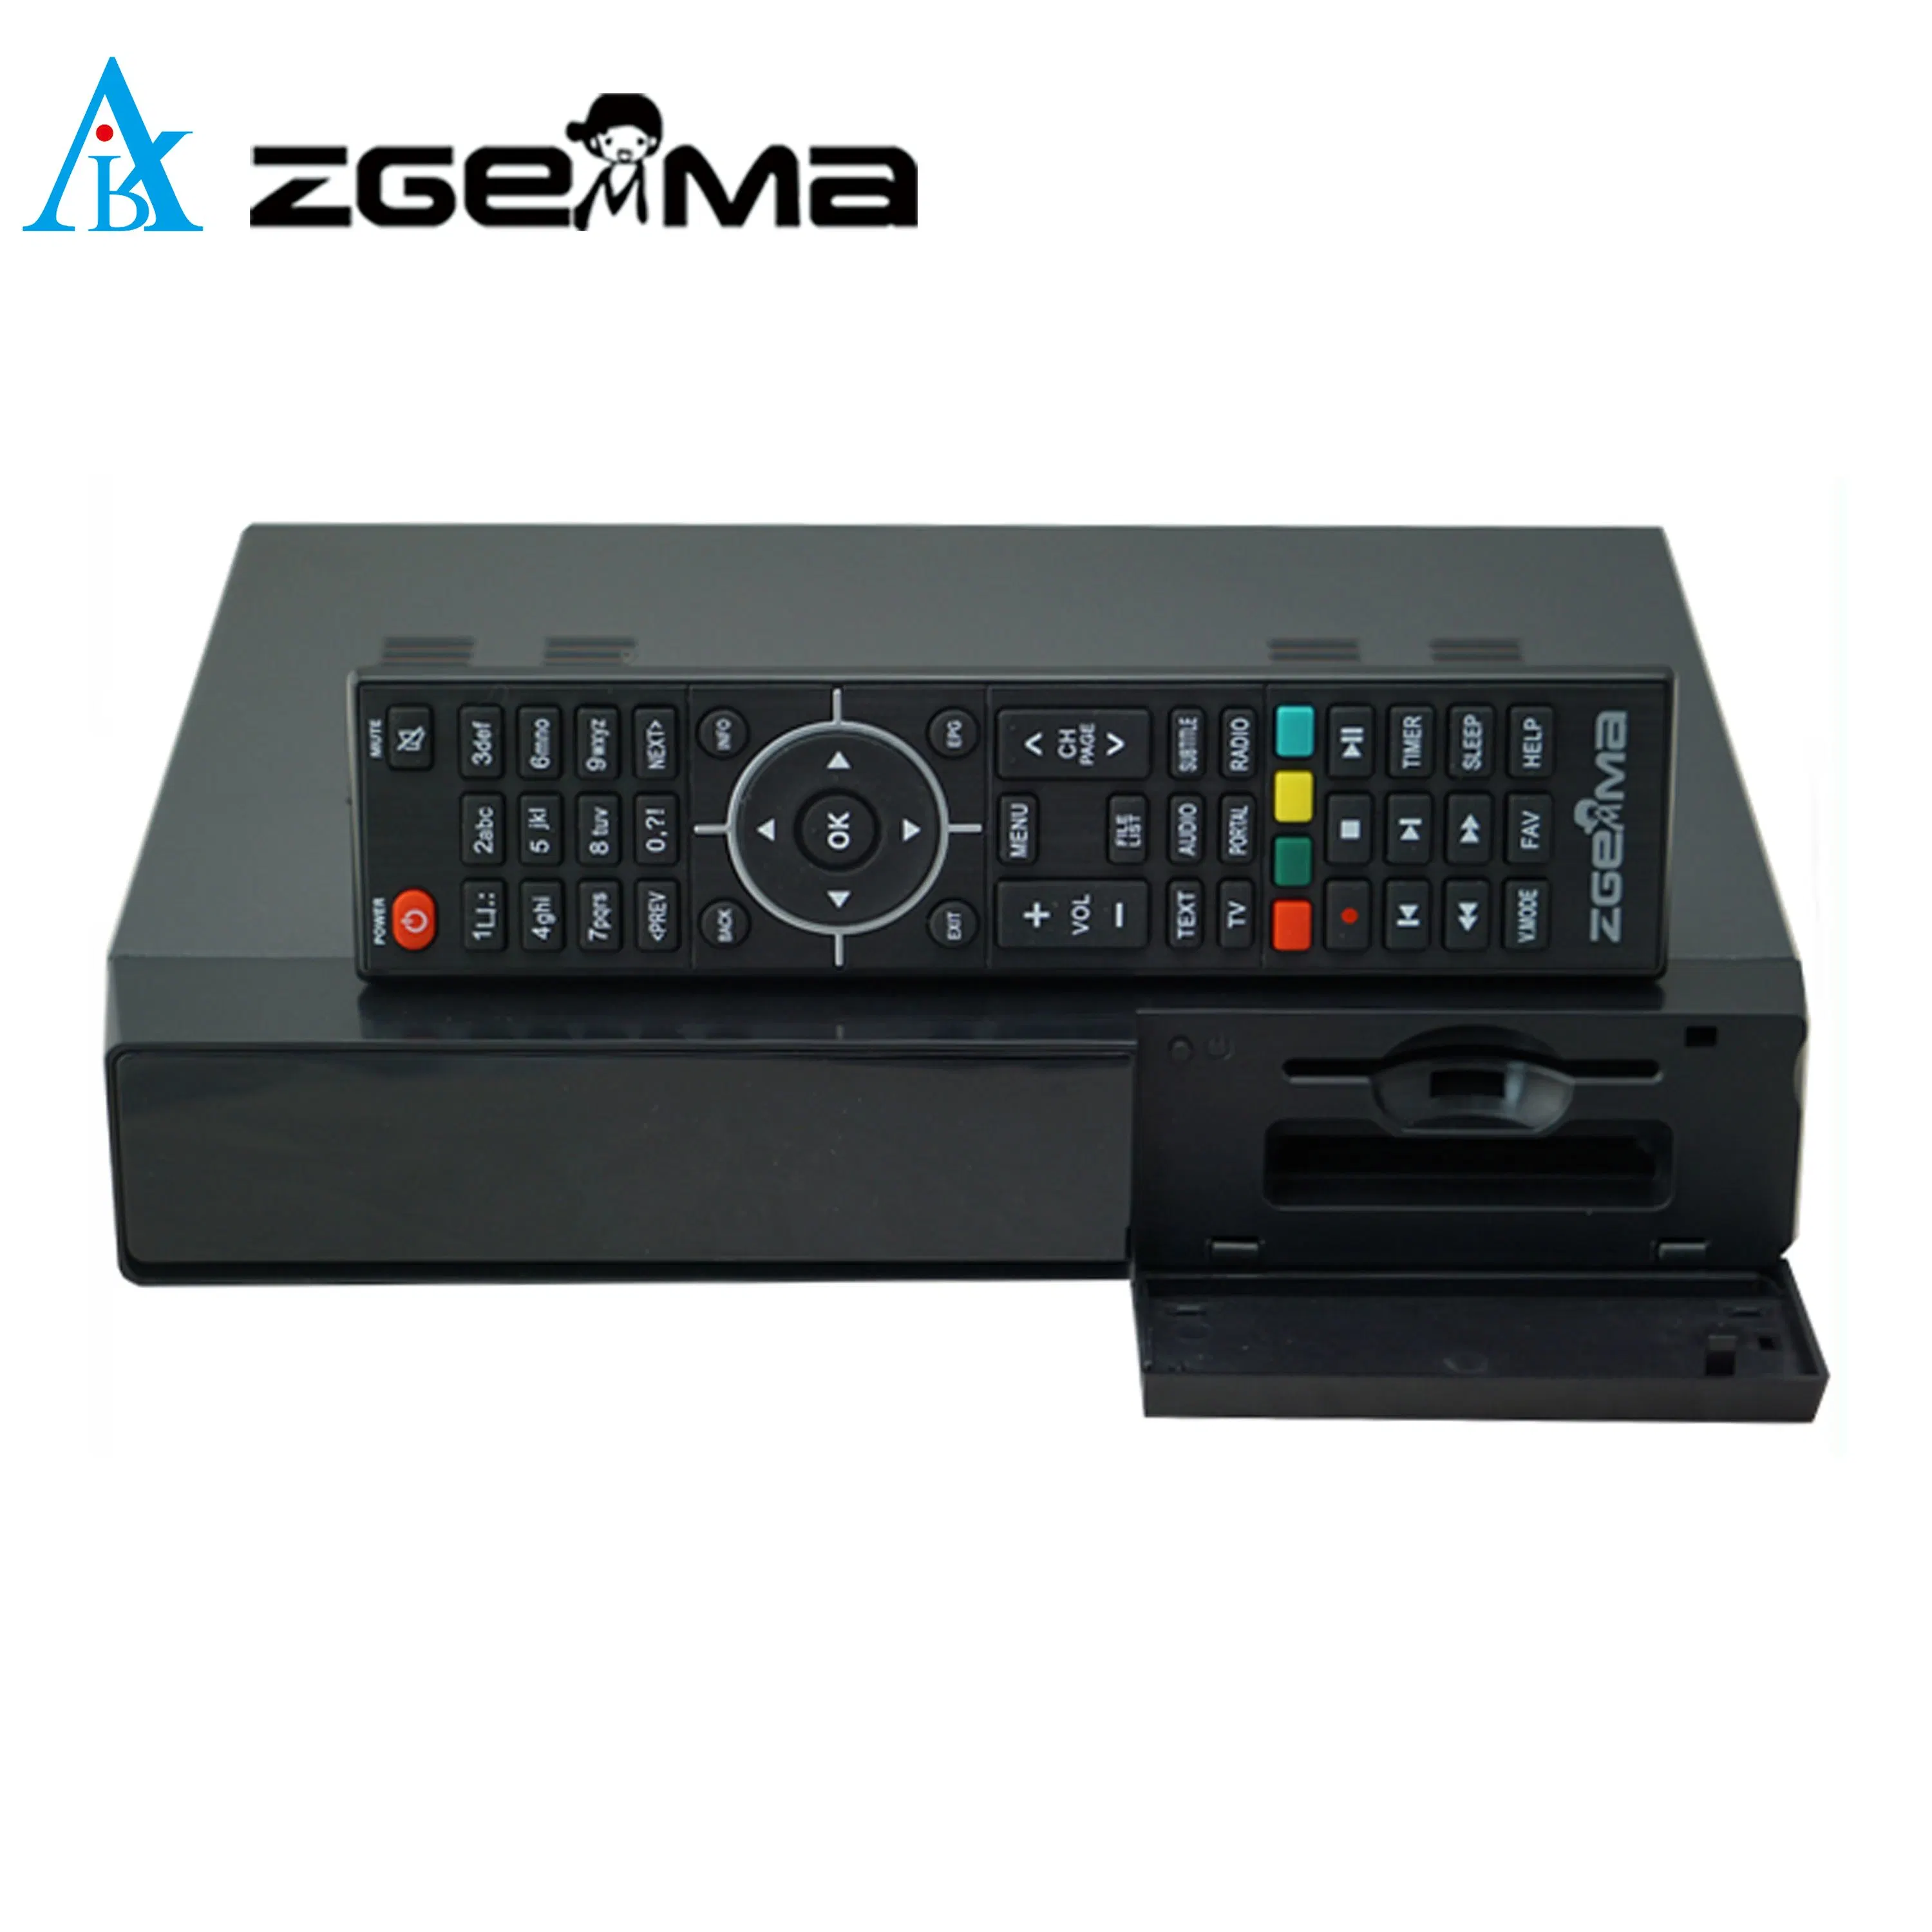 Zgemma H7s Satellite TV Receiver - Enigma2 Linux OS, 2*DVB-S2/S2X + DVB-T2/C Hybrid Tuner TV Decoder